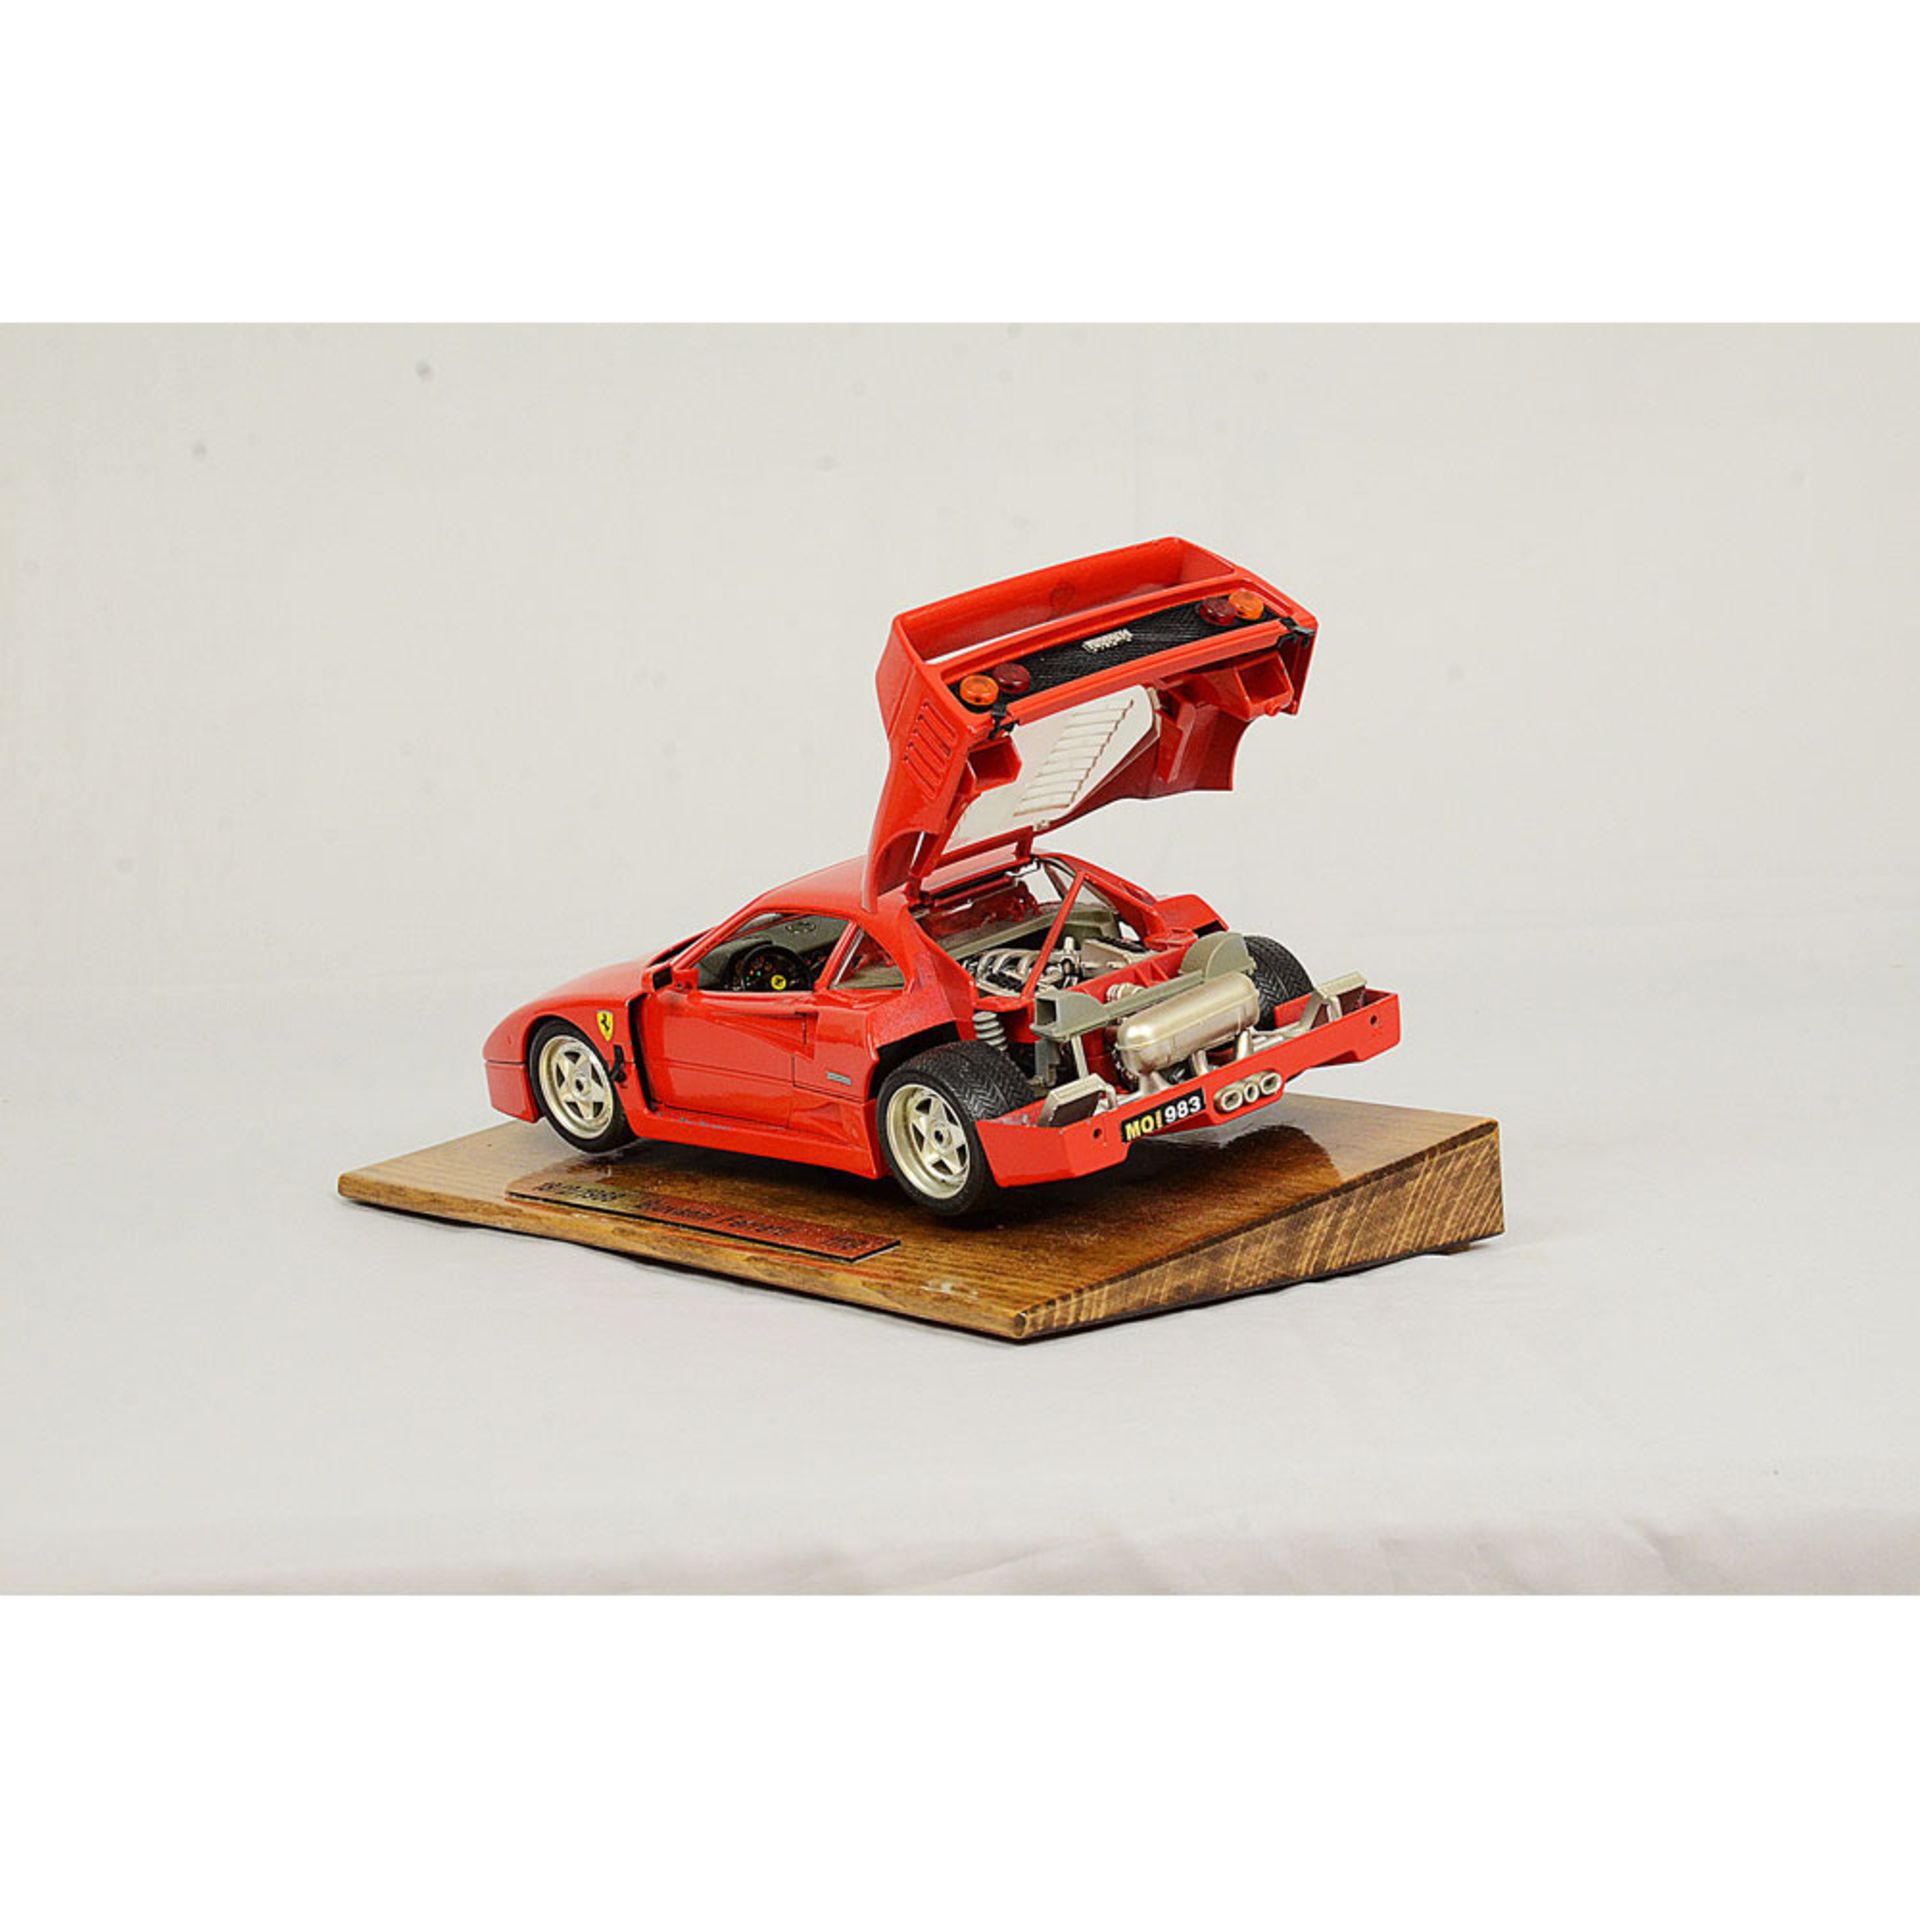 Burago Ferrari F40 1:18 scale model car - Image 7 of 10